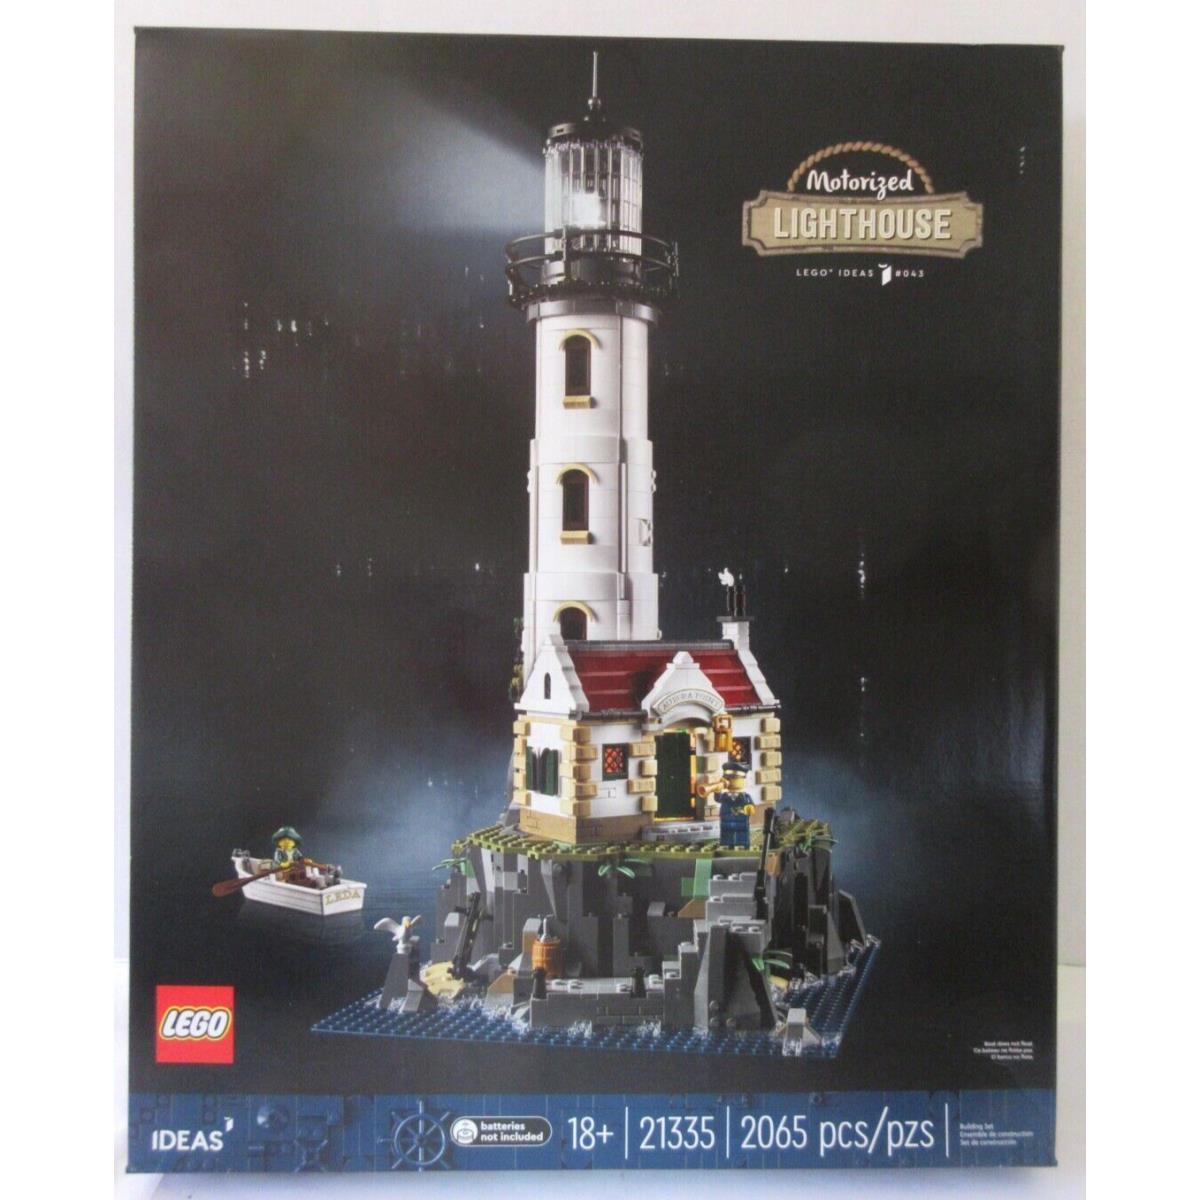 Lego Ideas 21335 Motorized Lighthouse in Shipping Box